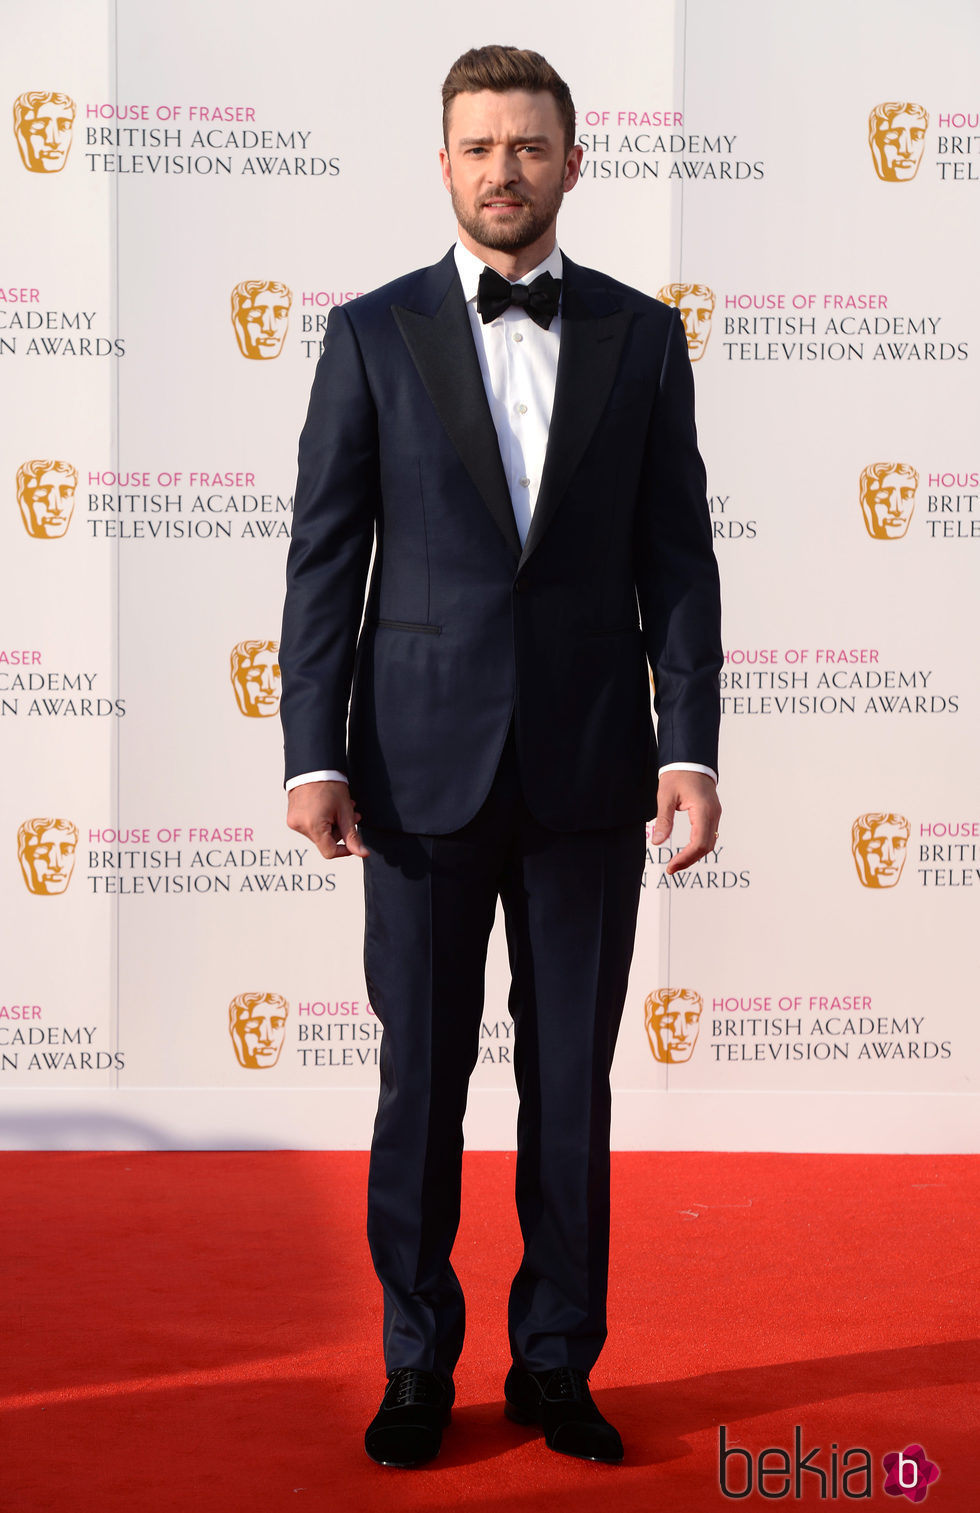 Justin Timberlake en los Premios BAFTA TV 2016